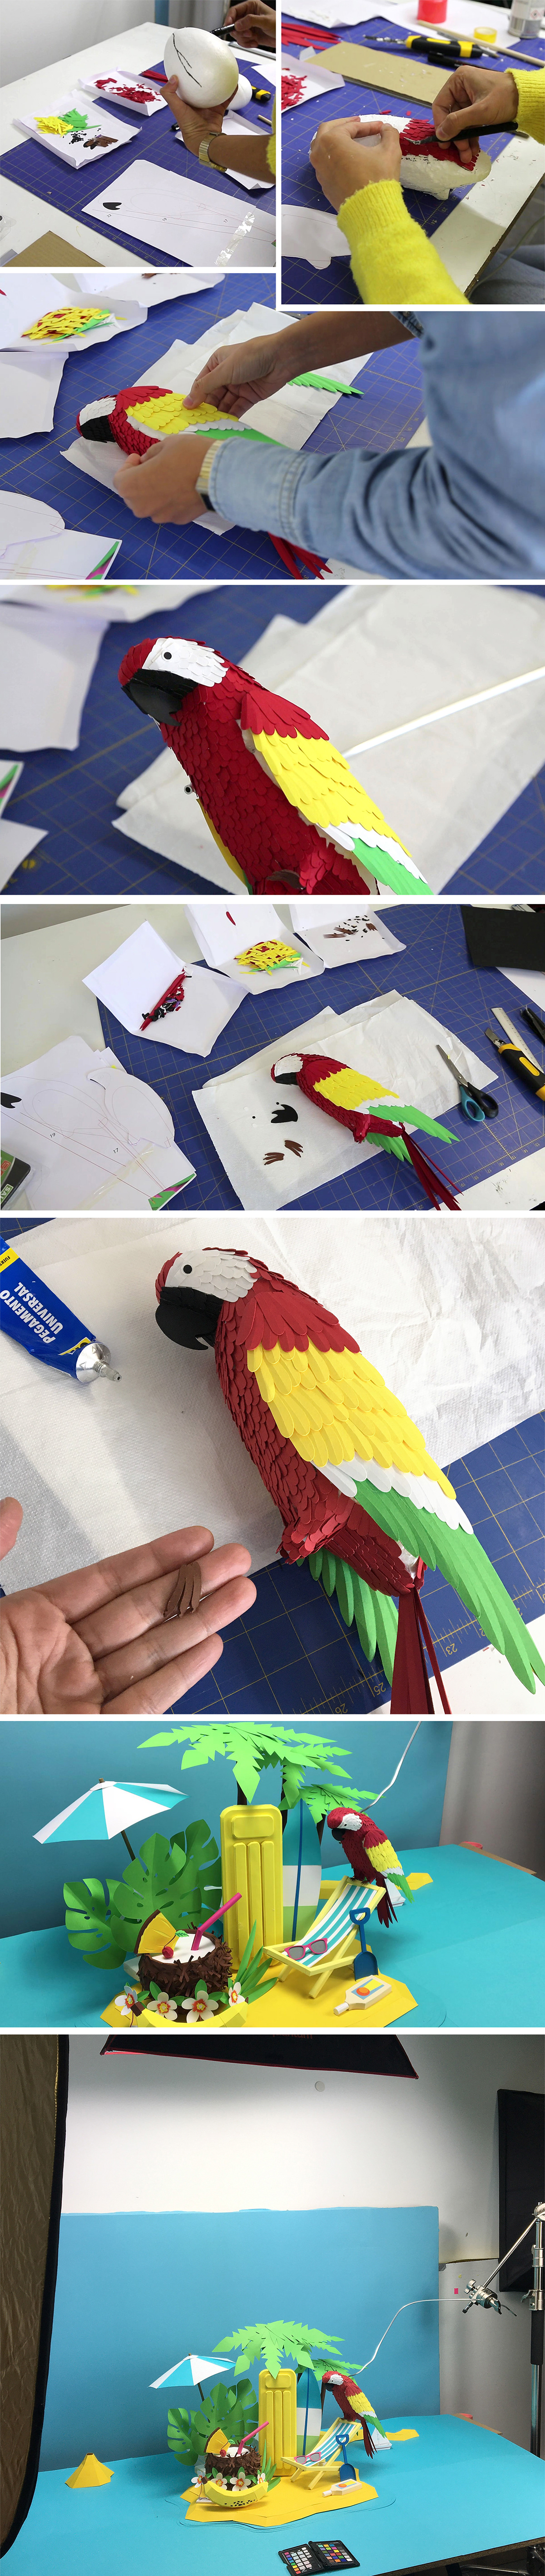 papercraft set set design  paper cut crafts   Island parrot Aena airport